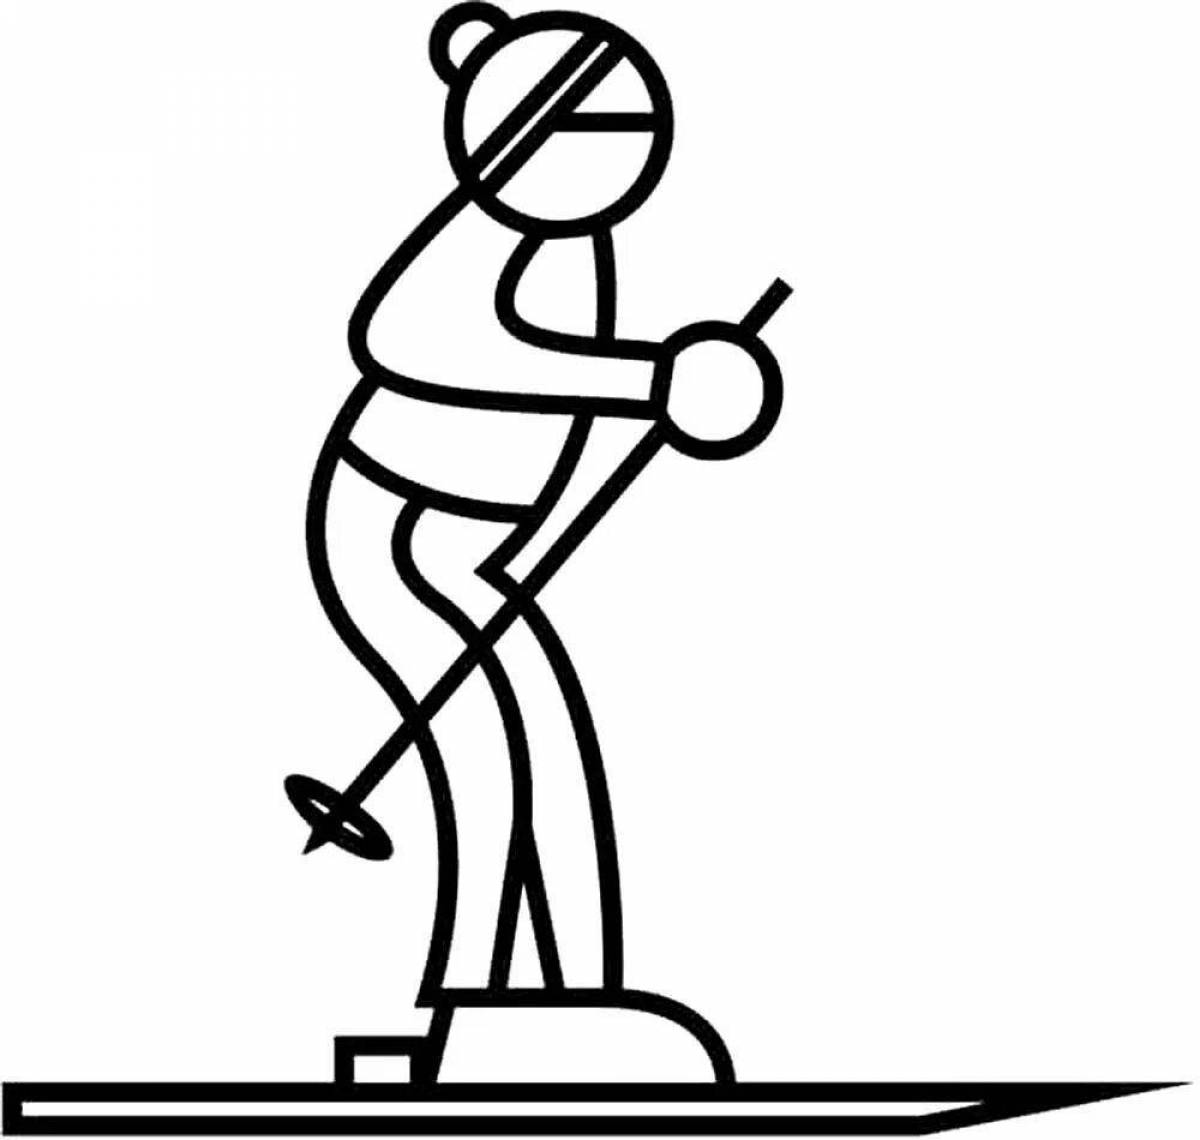 Skier in motion #6